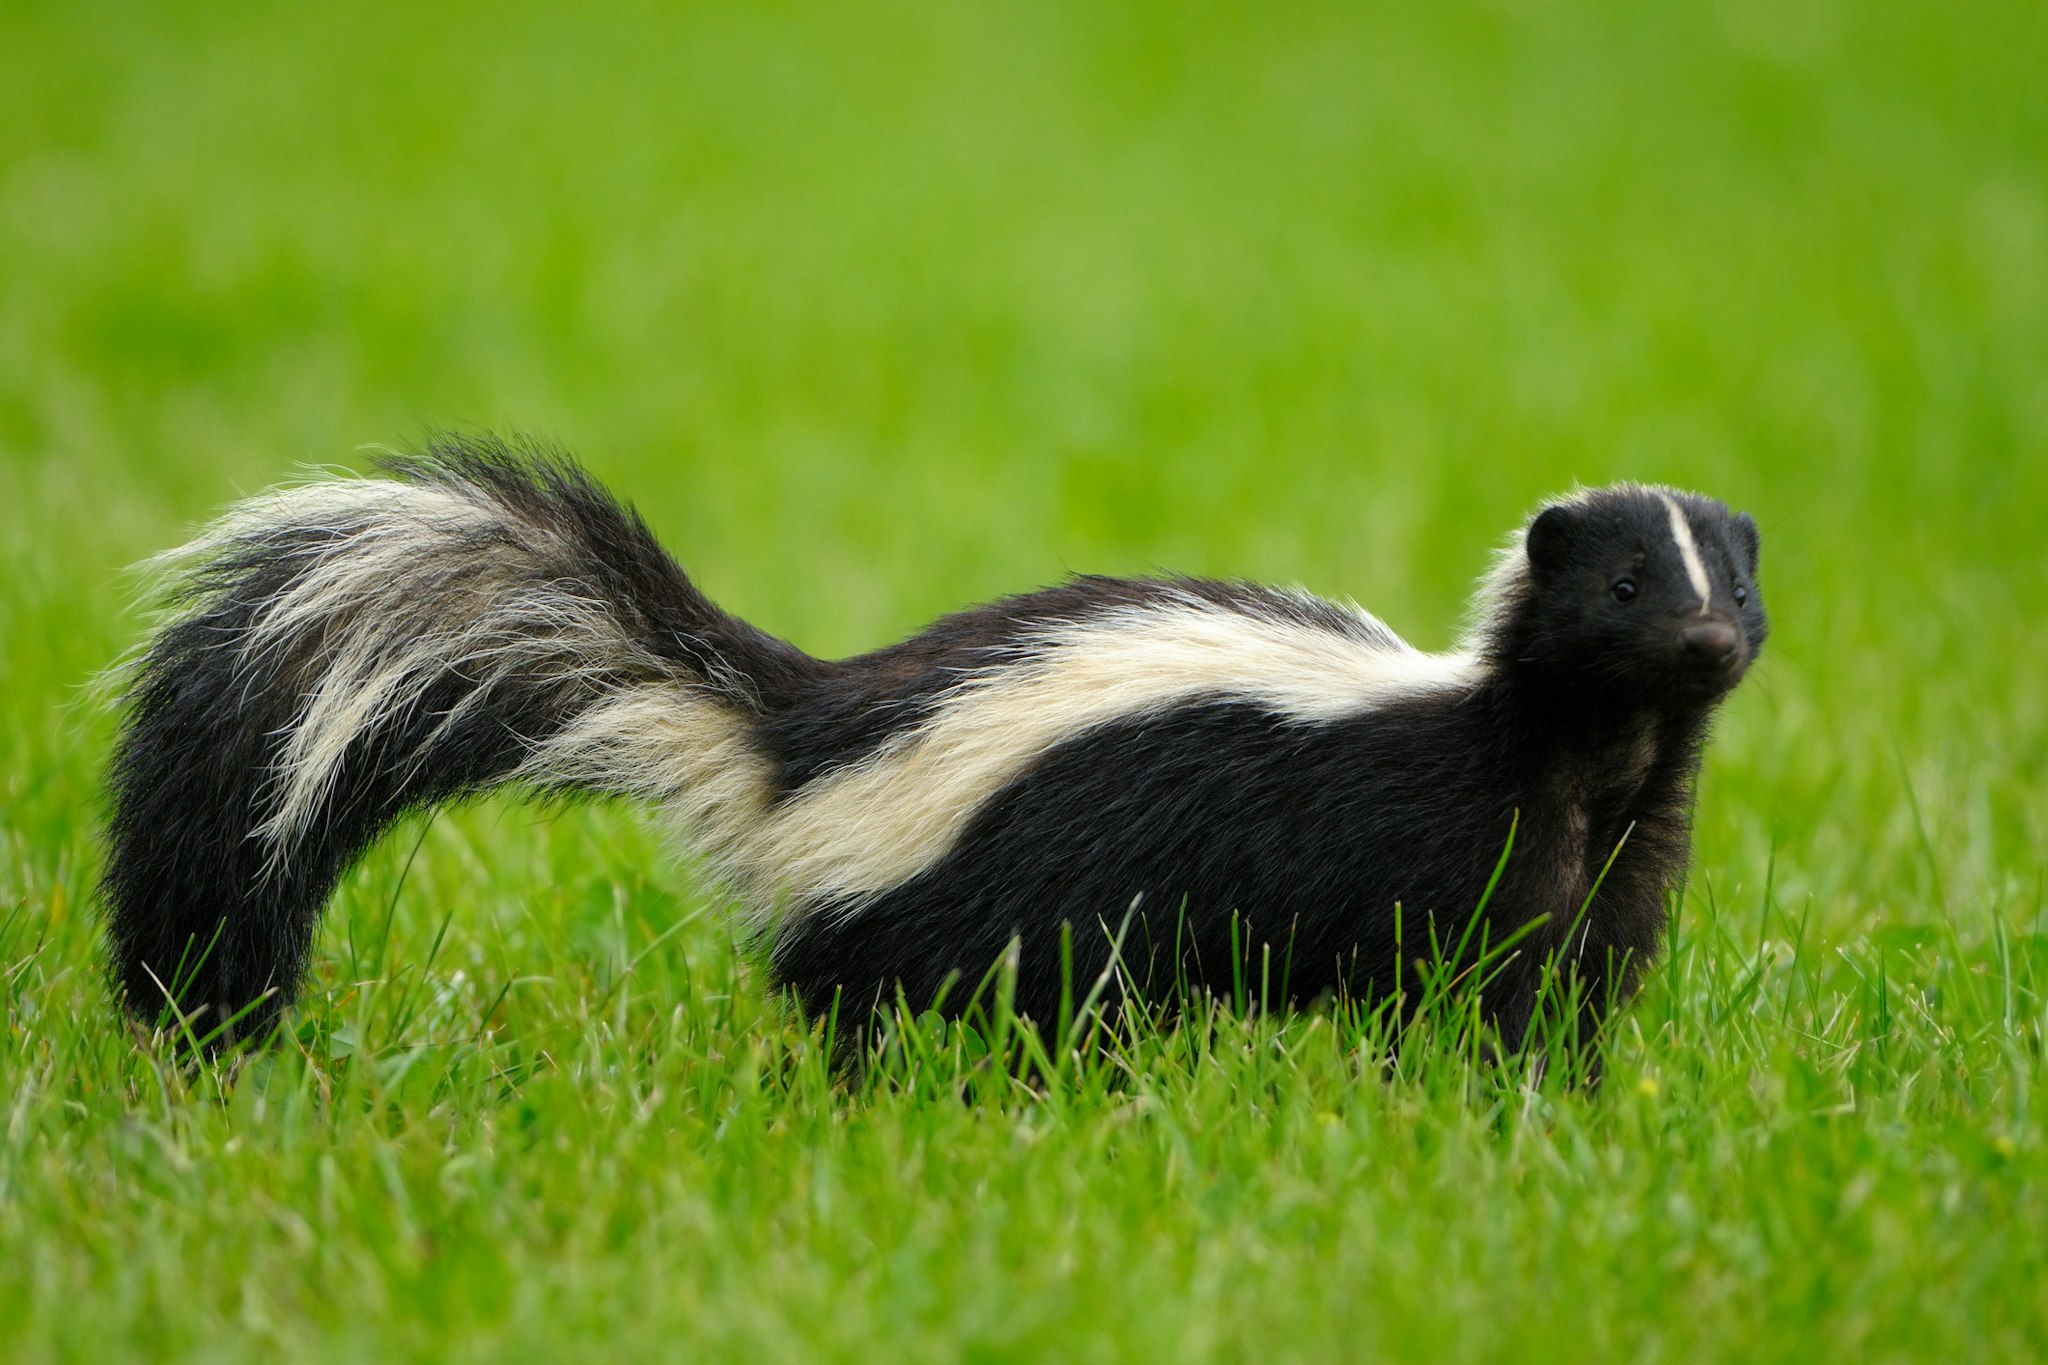 Portrait of skunk in grass - stock photo